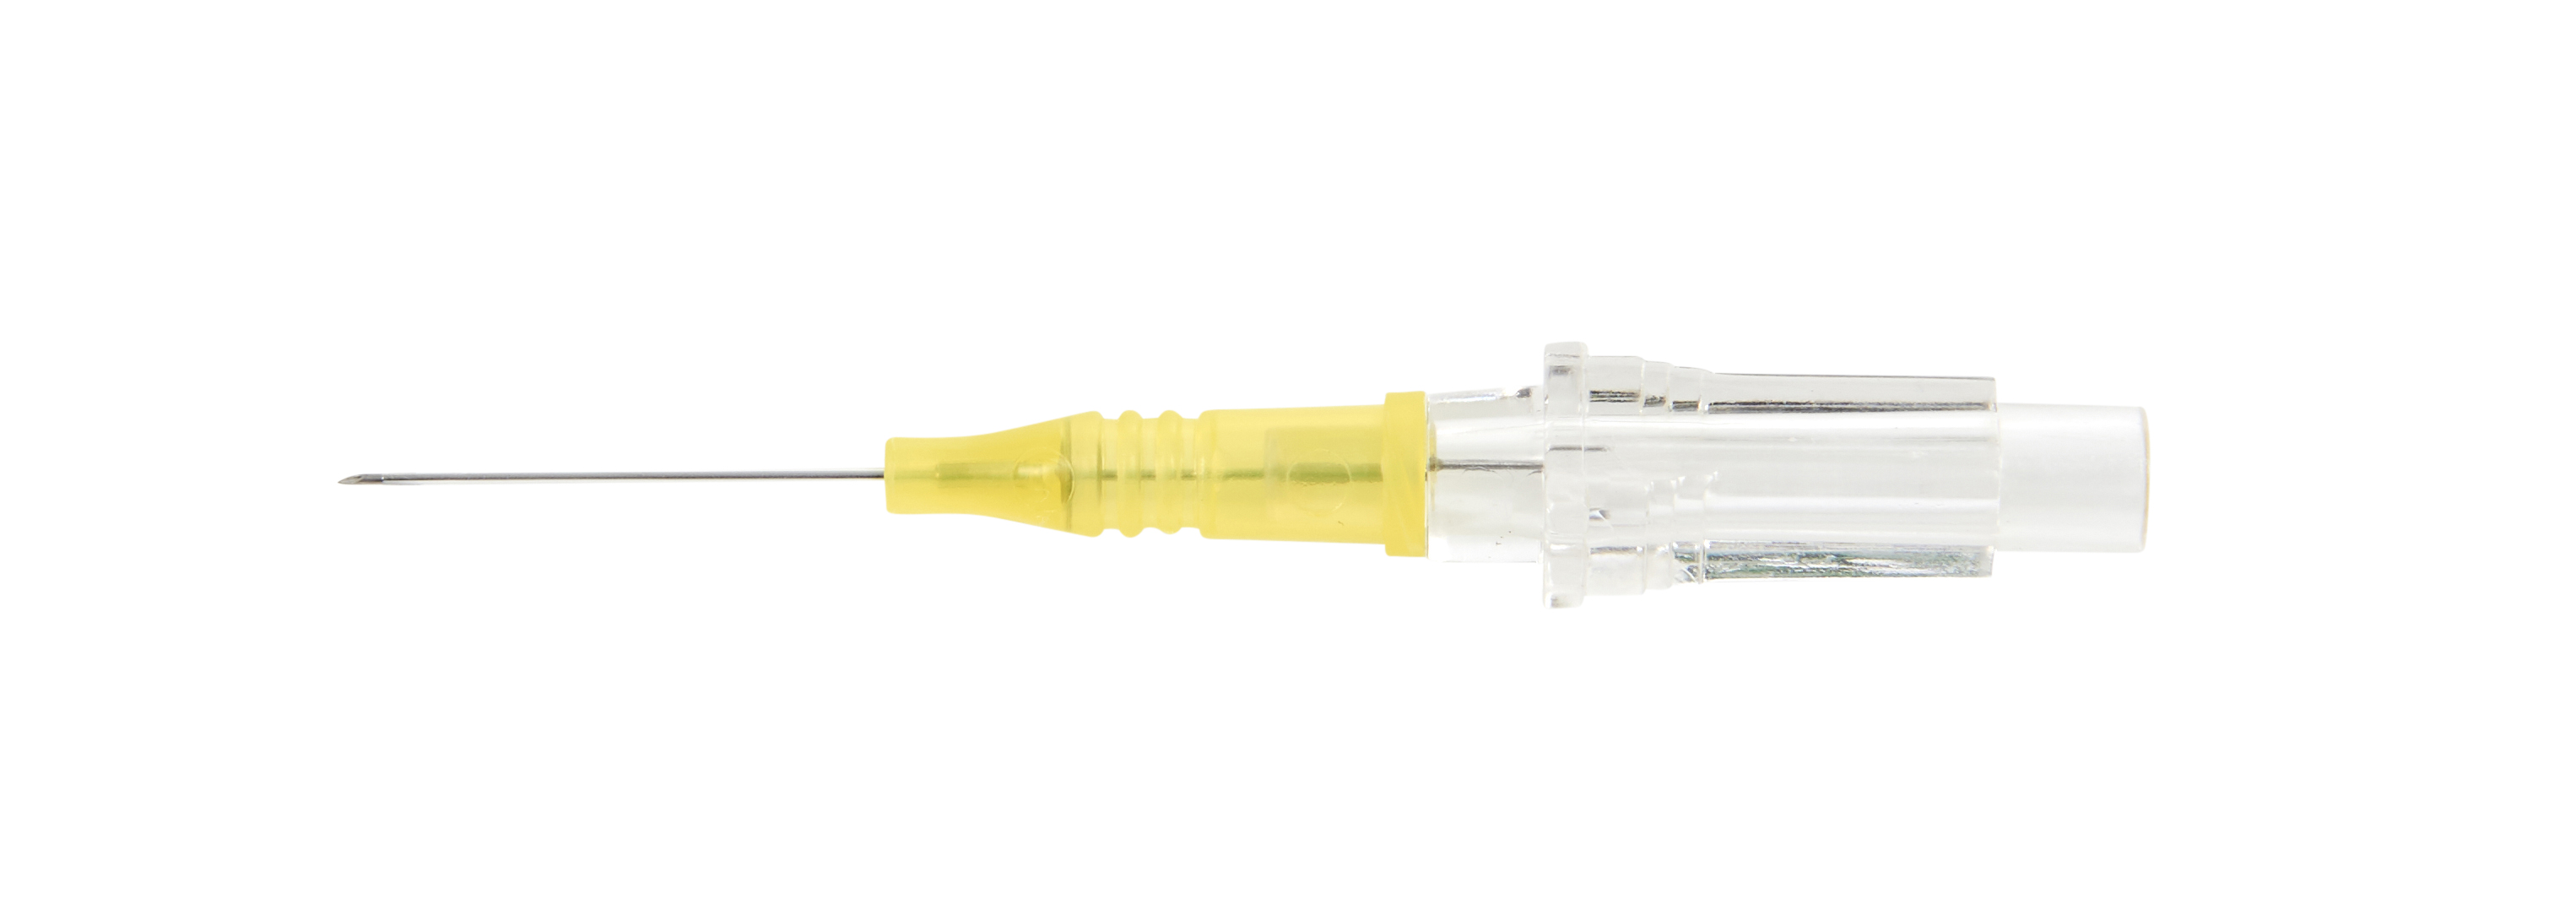 KRUUSE Venocan Pencil style IV catheter, 0,7x19mm, 24G, 50/pk